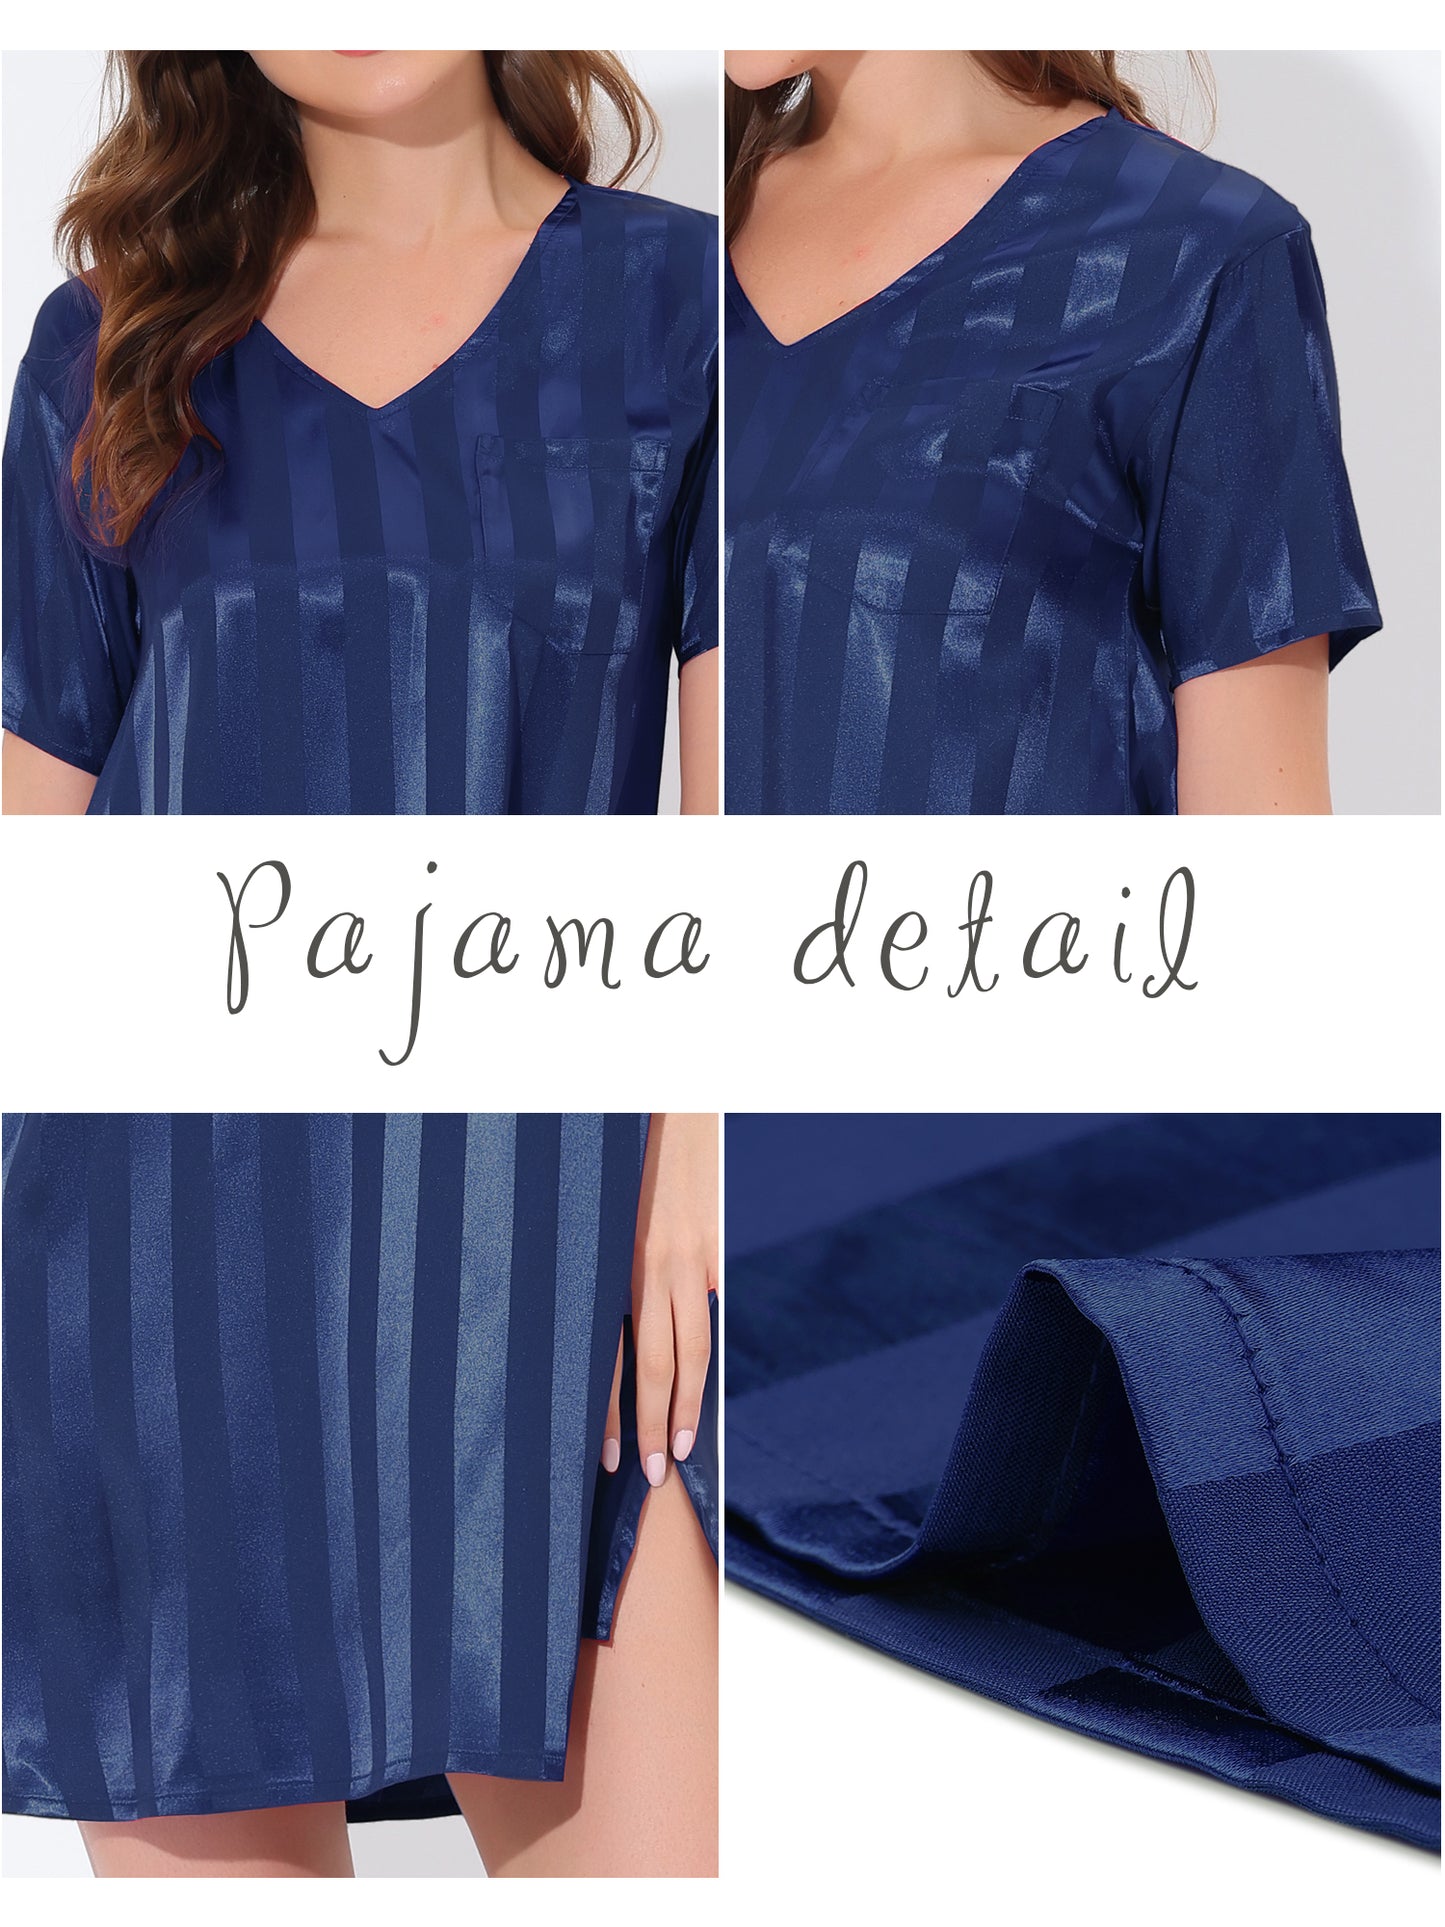 cheibear Pajamas Satin Dress Nightshirt Short Sleeves Lounge Sleepwear Nightgown Blue